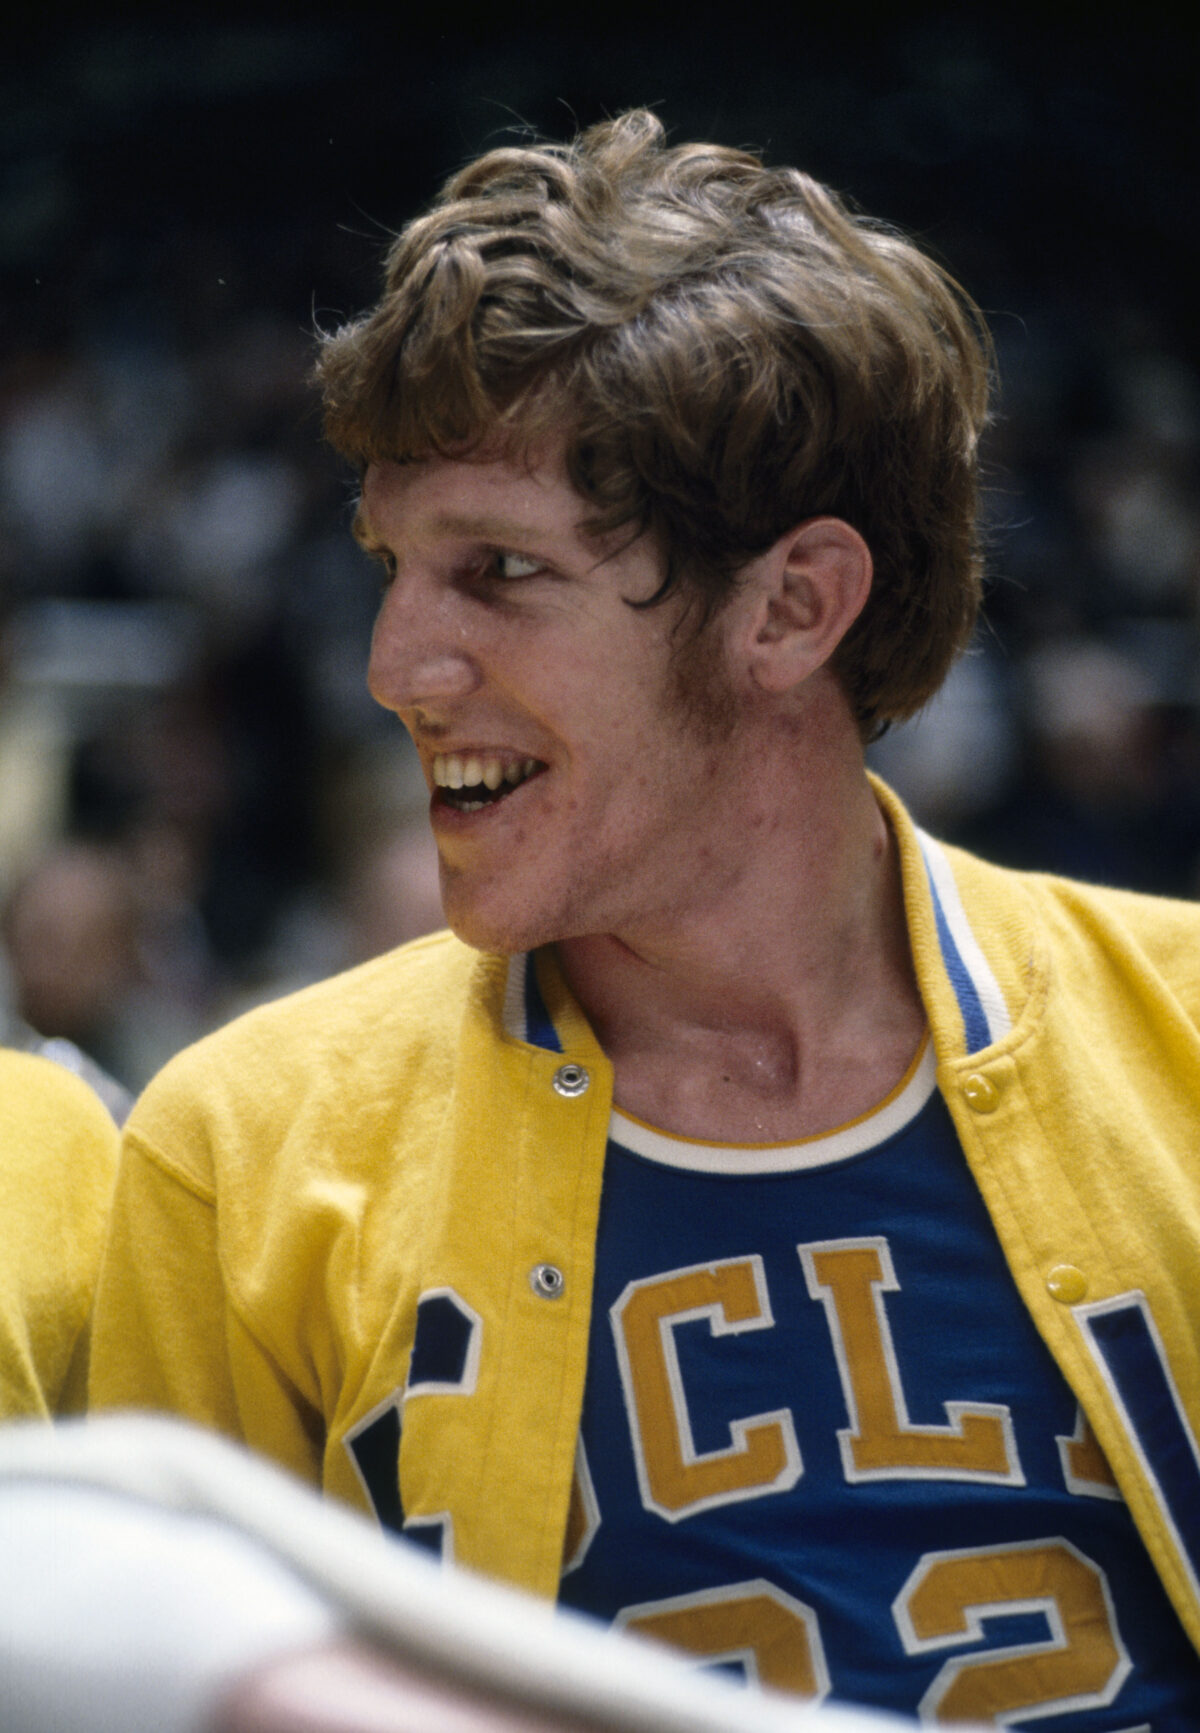 BREAKING: UCLA Bruins legend Bill Walton passes away at 71